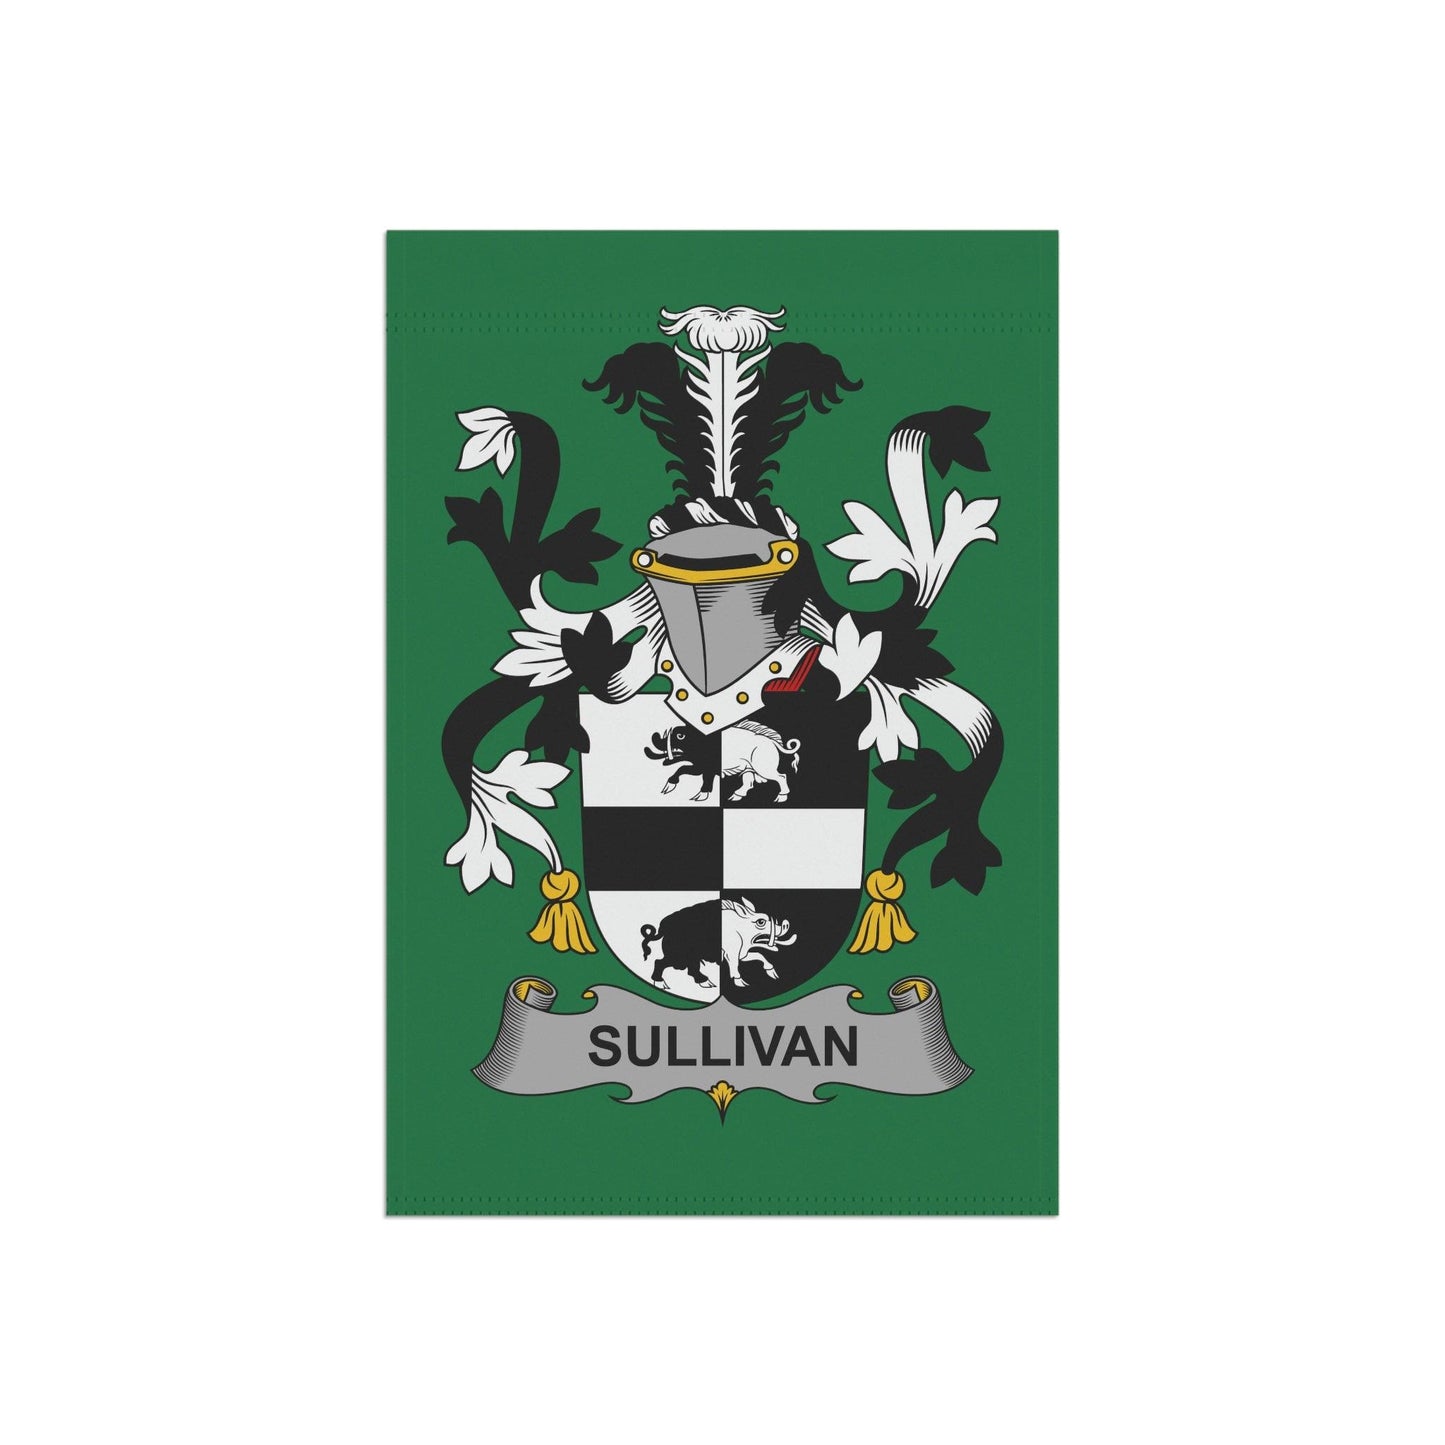 Sullivan Family Coat Of Arms Irish Flag, Irish Family Name Garden Banner